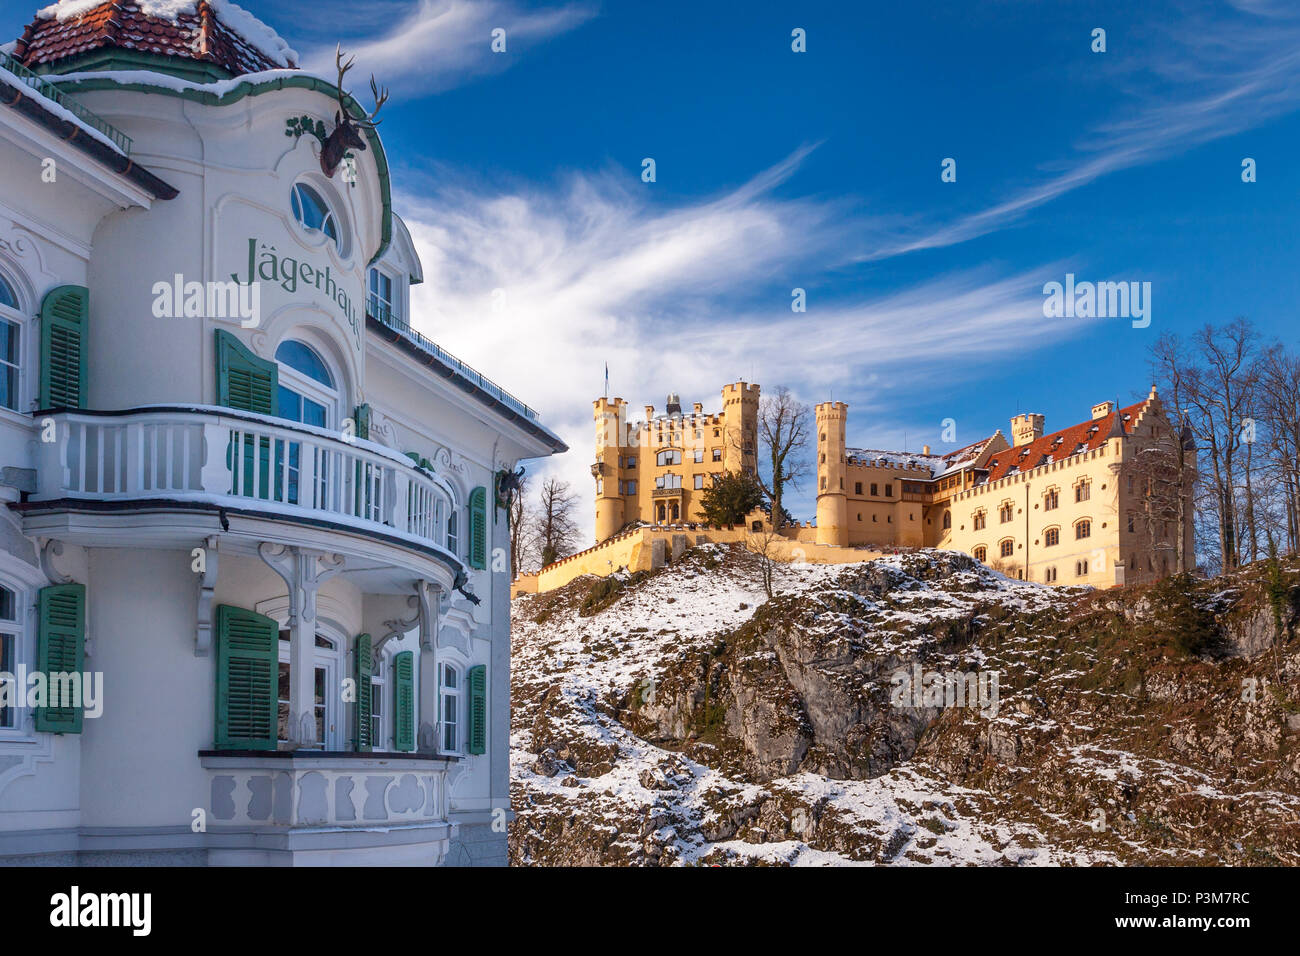 Inverno a Villa Jägerhaus Hotel e il Castello di Hohenschwangau, Schwangau, Baviera, Germania Foto Stock